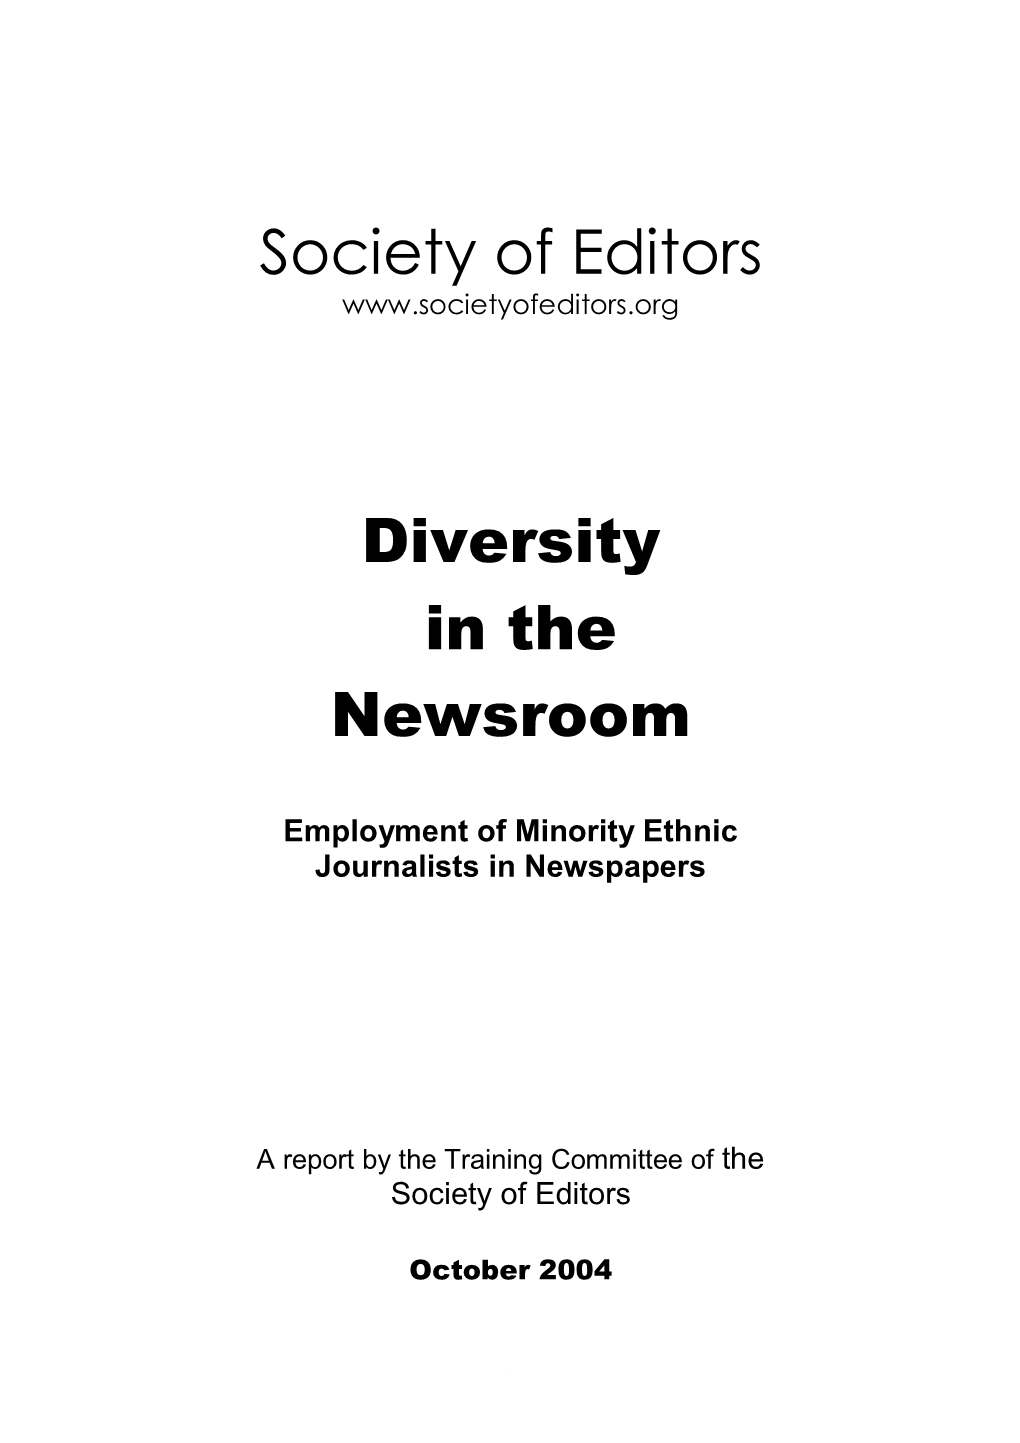 Society of Editors Diversity in the Newsroom